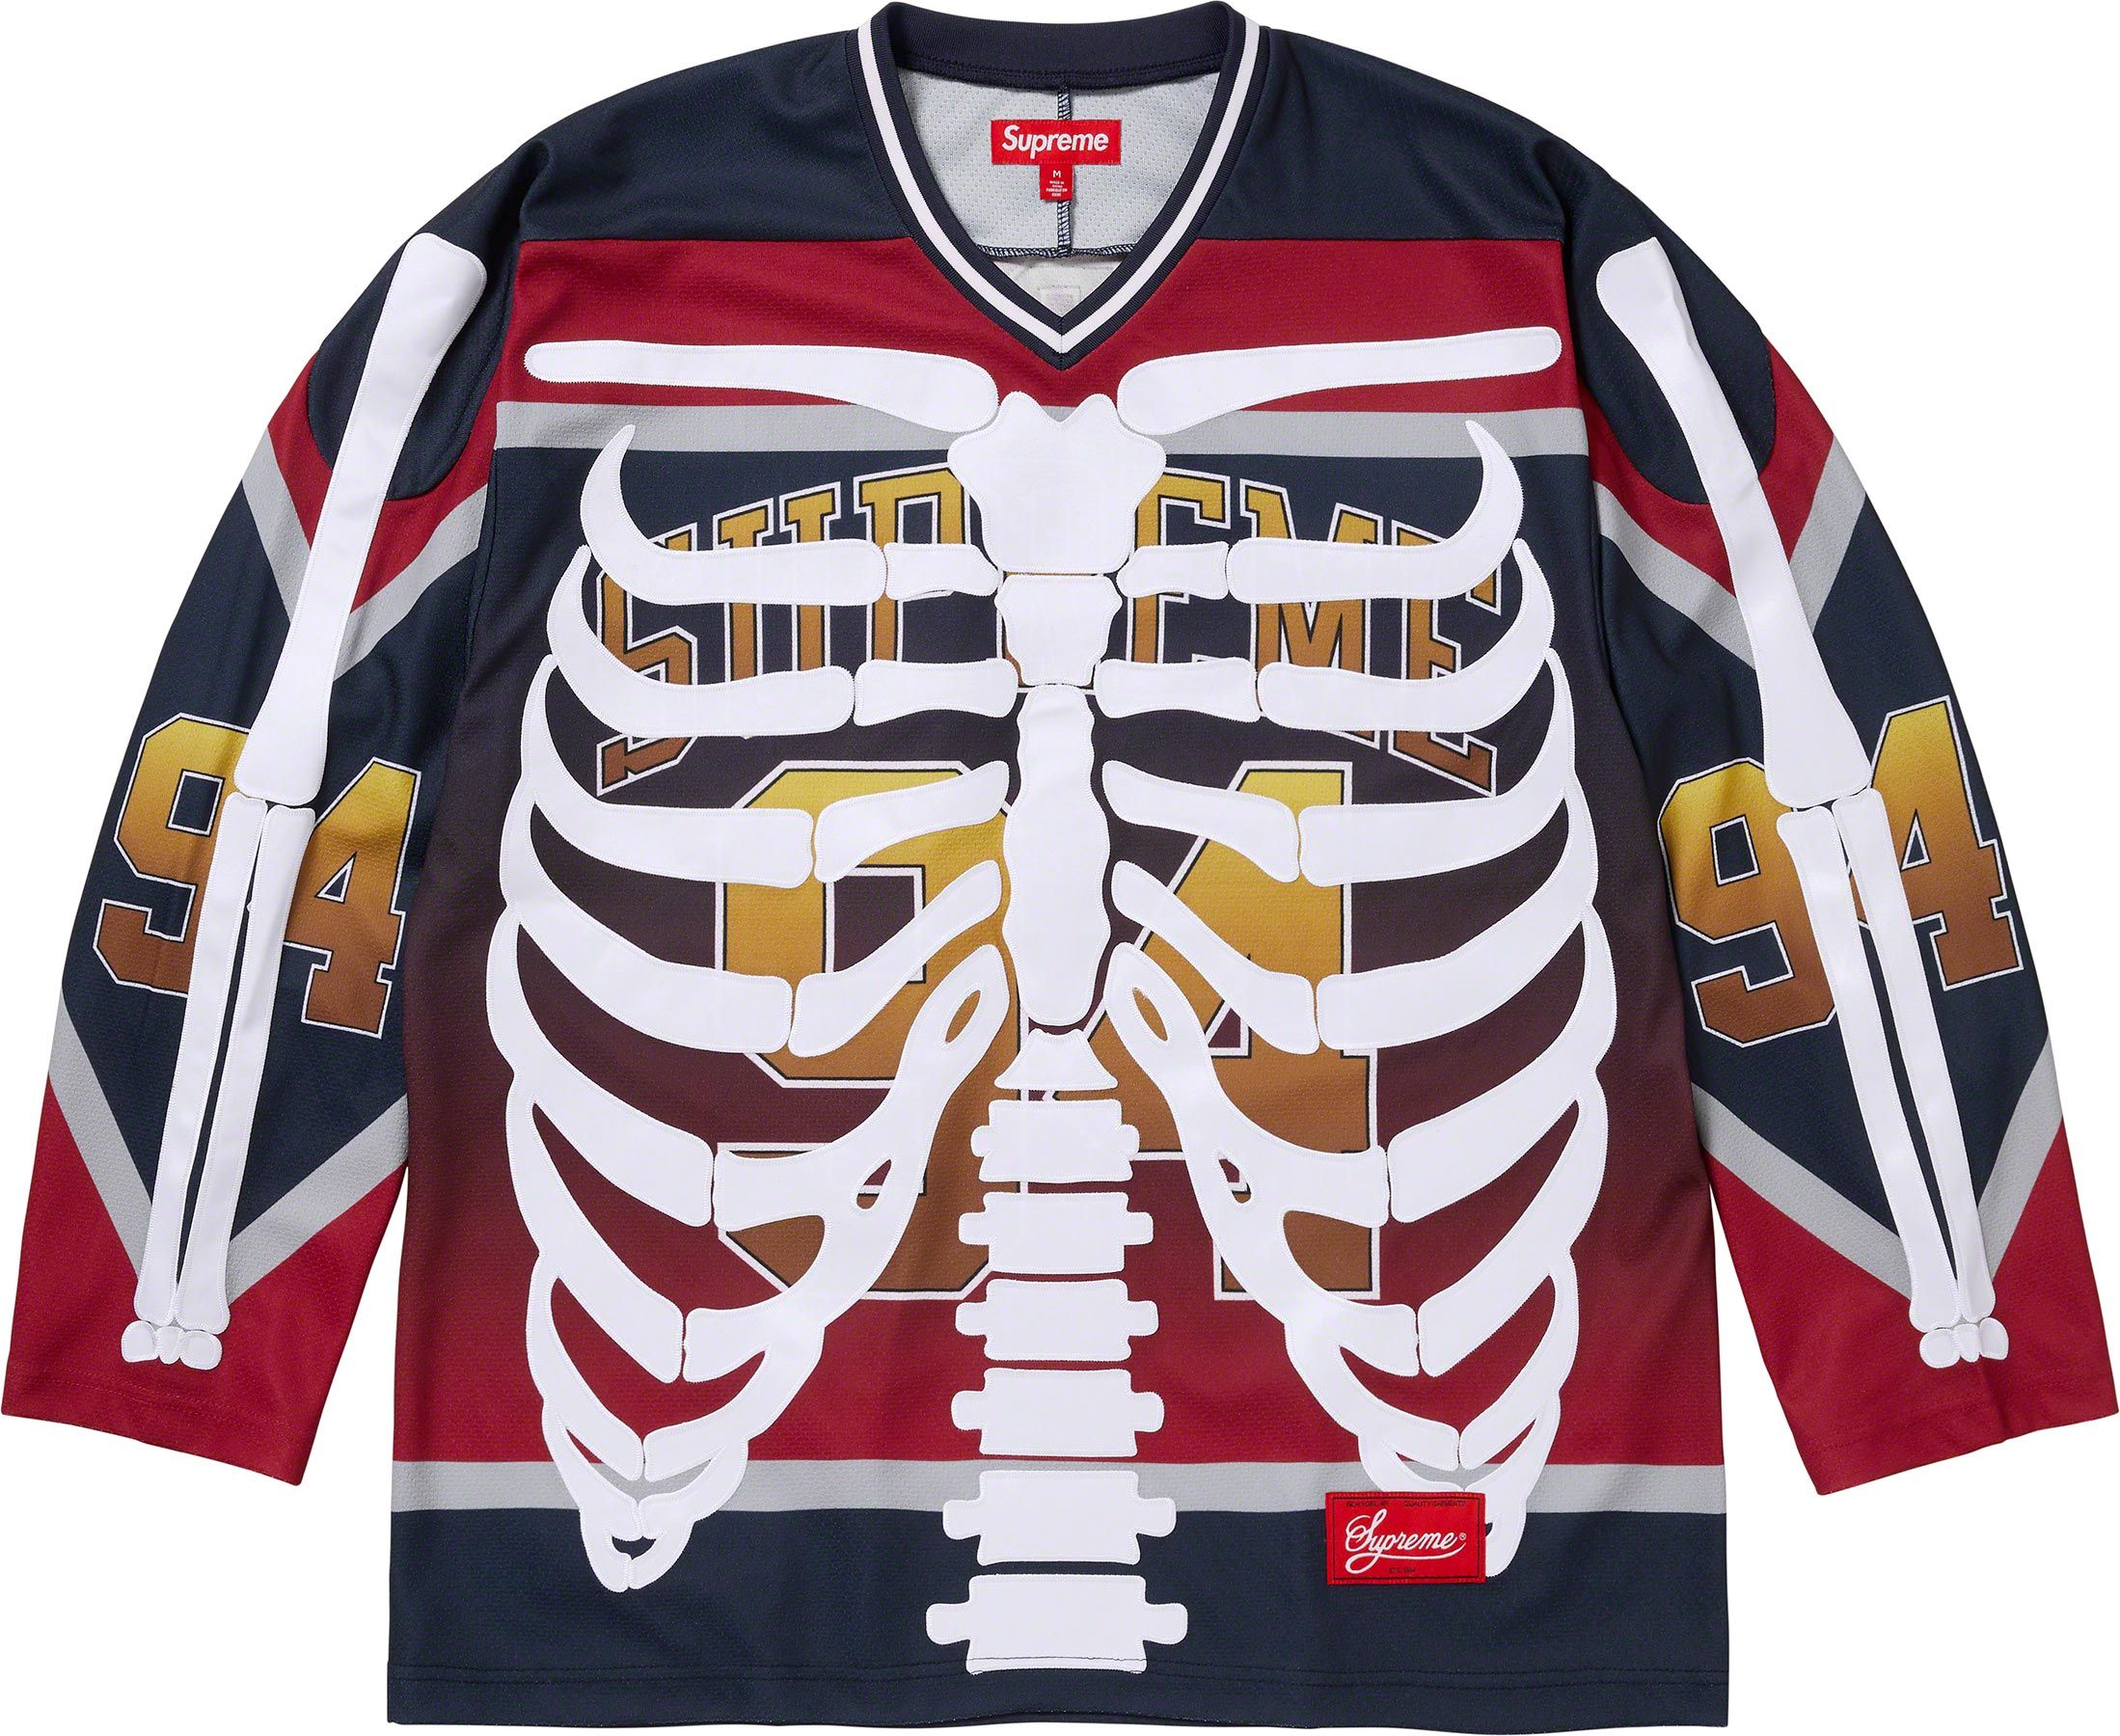 ▪️Supreme Pigment S Logo 6-Panel ▪️Supreme Bones Hockey Jersey